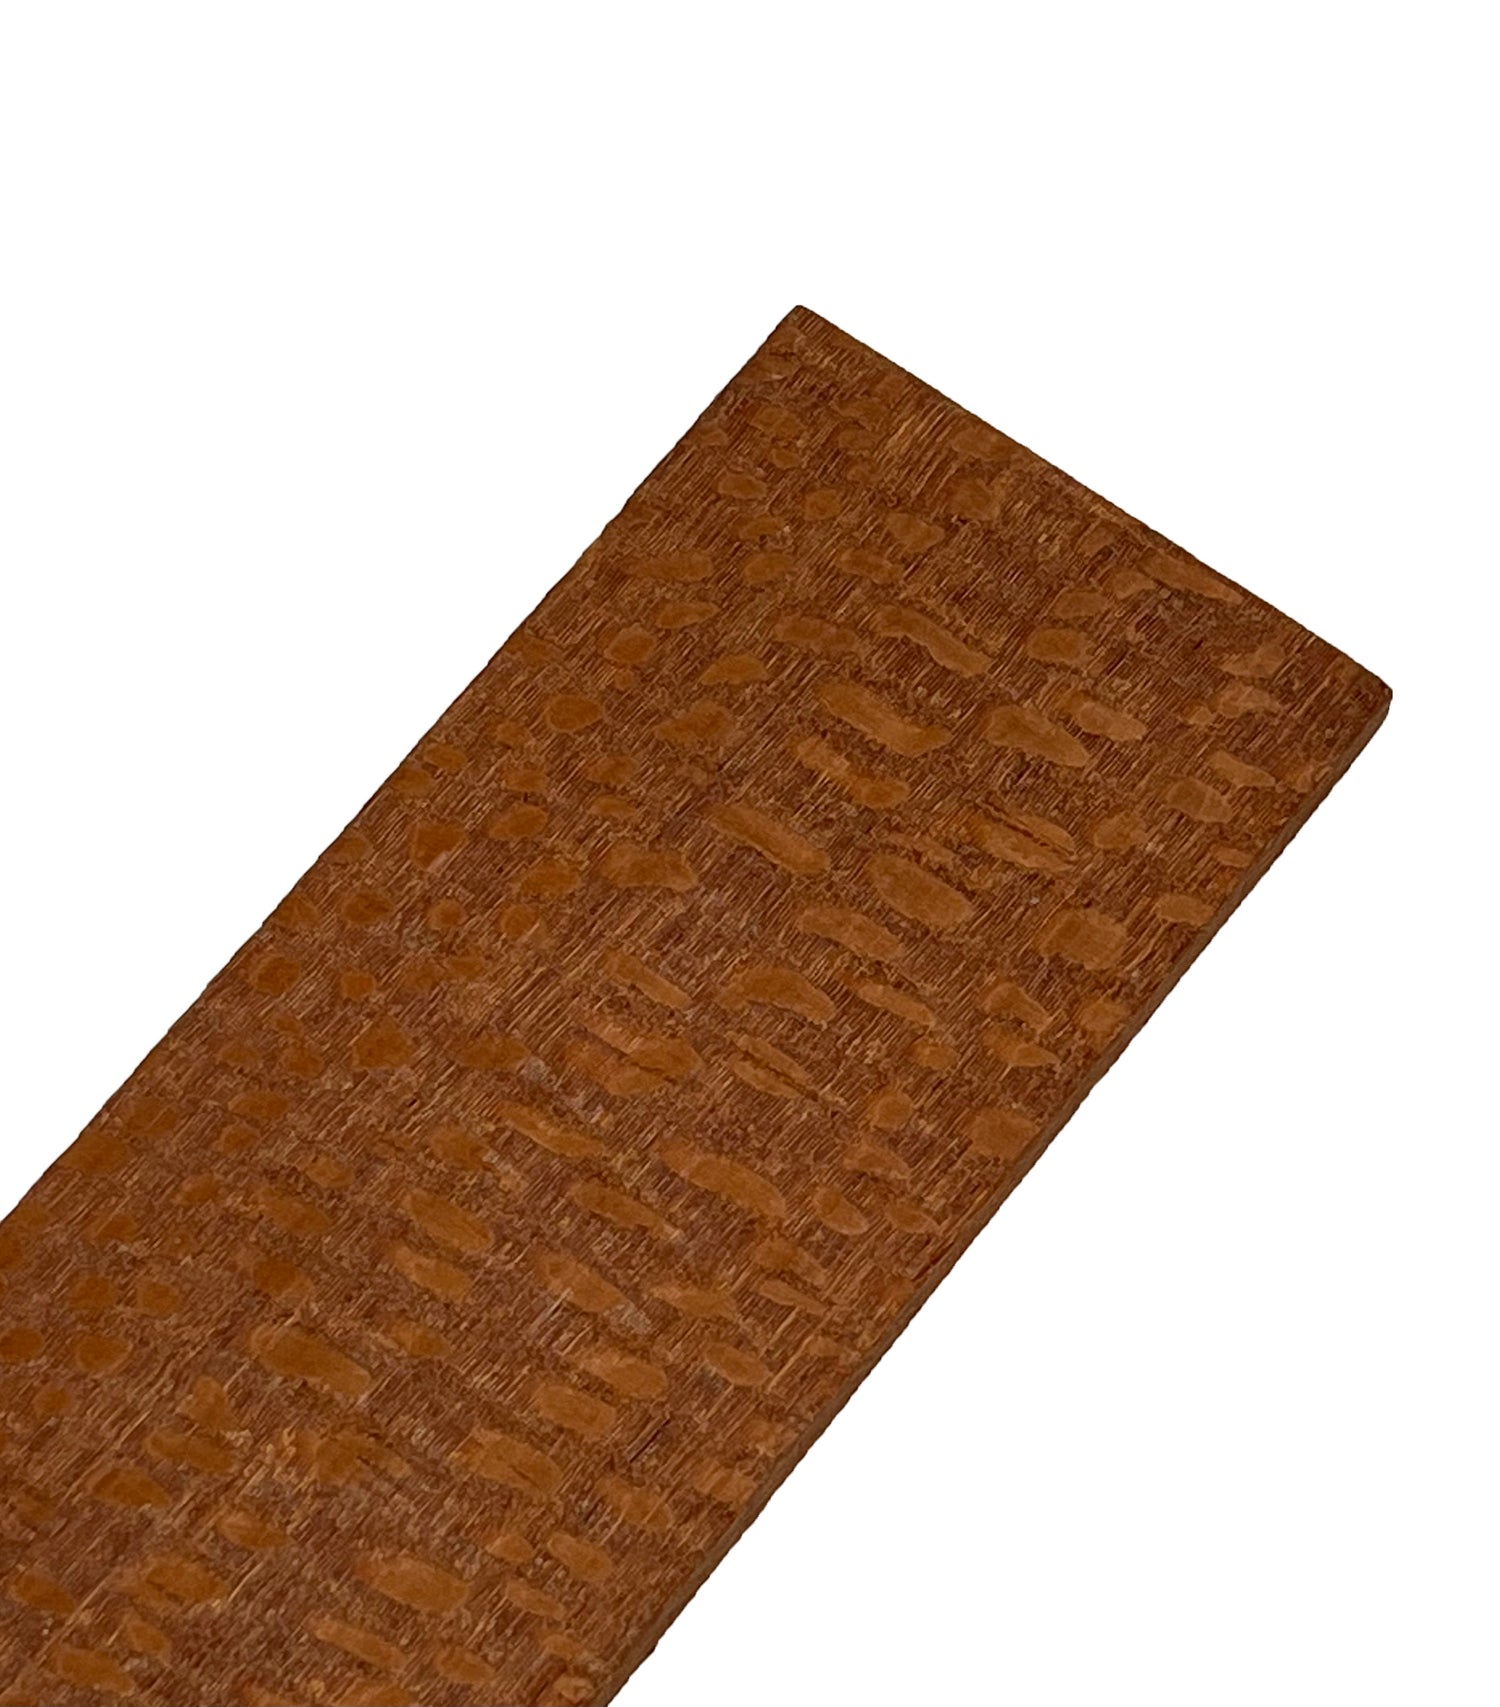 Leopardwood Thin Stock Lumber Board Wood Blank